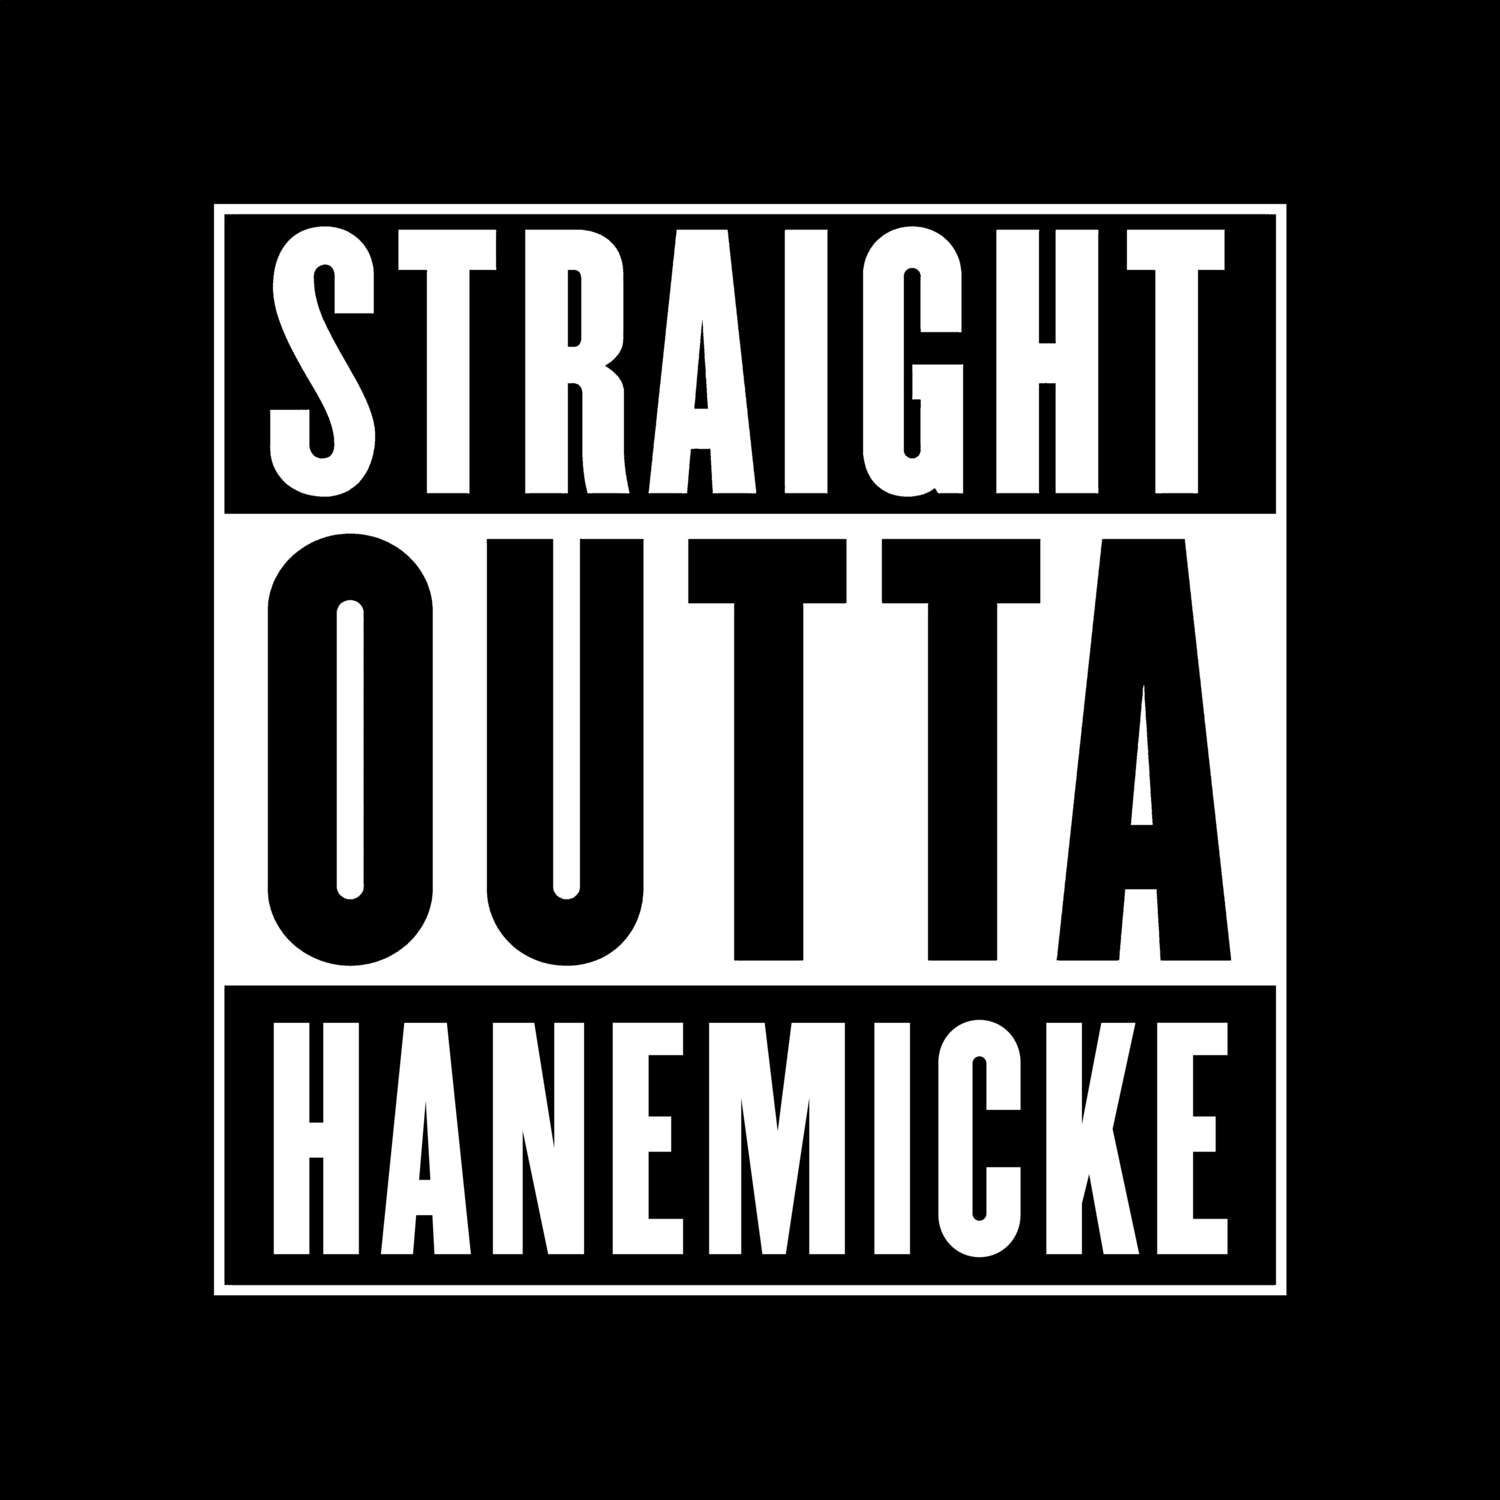 Hanemicke T-Shirt »Straight Outta«